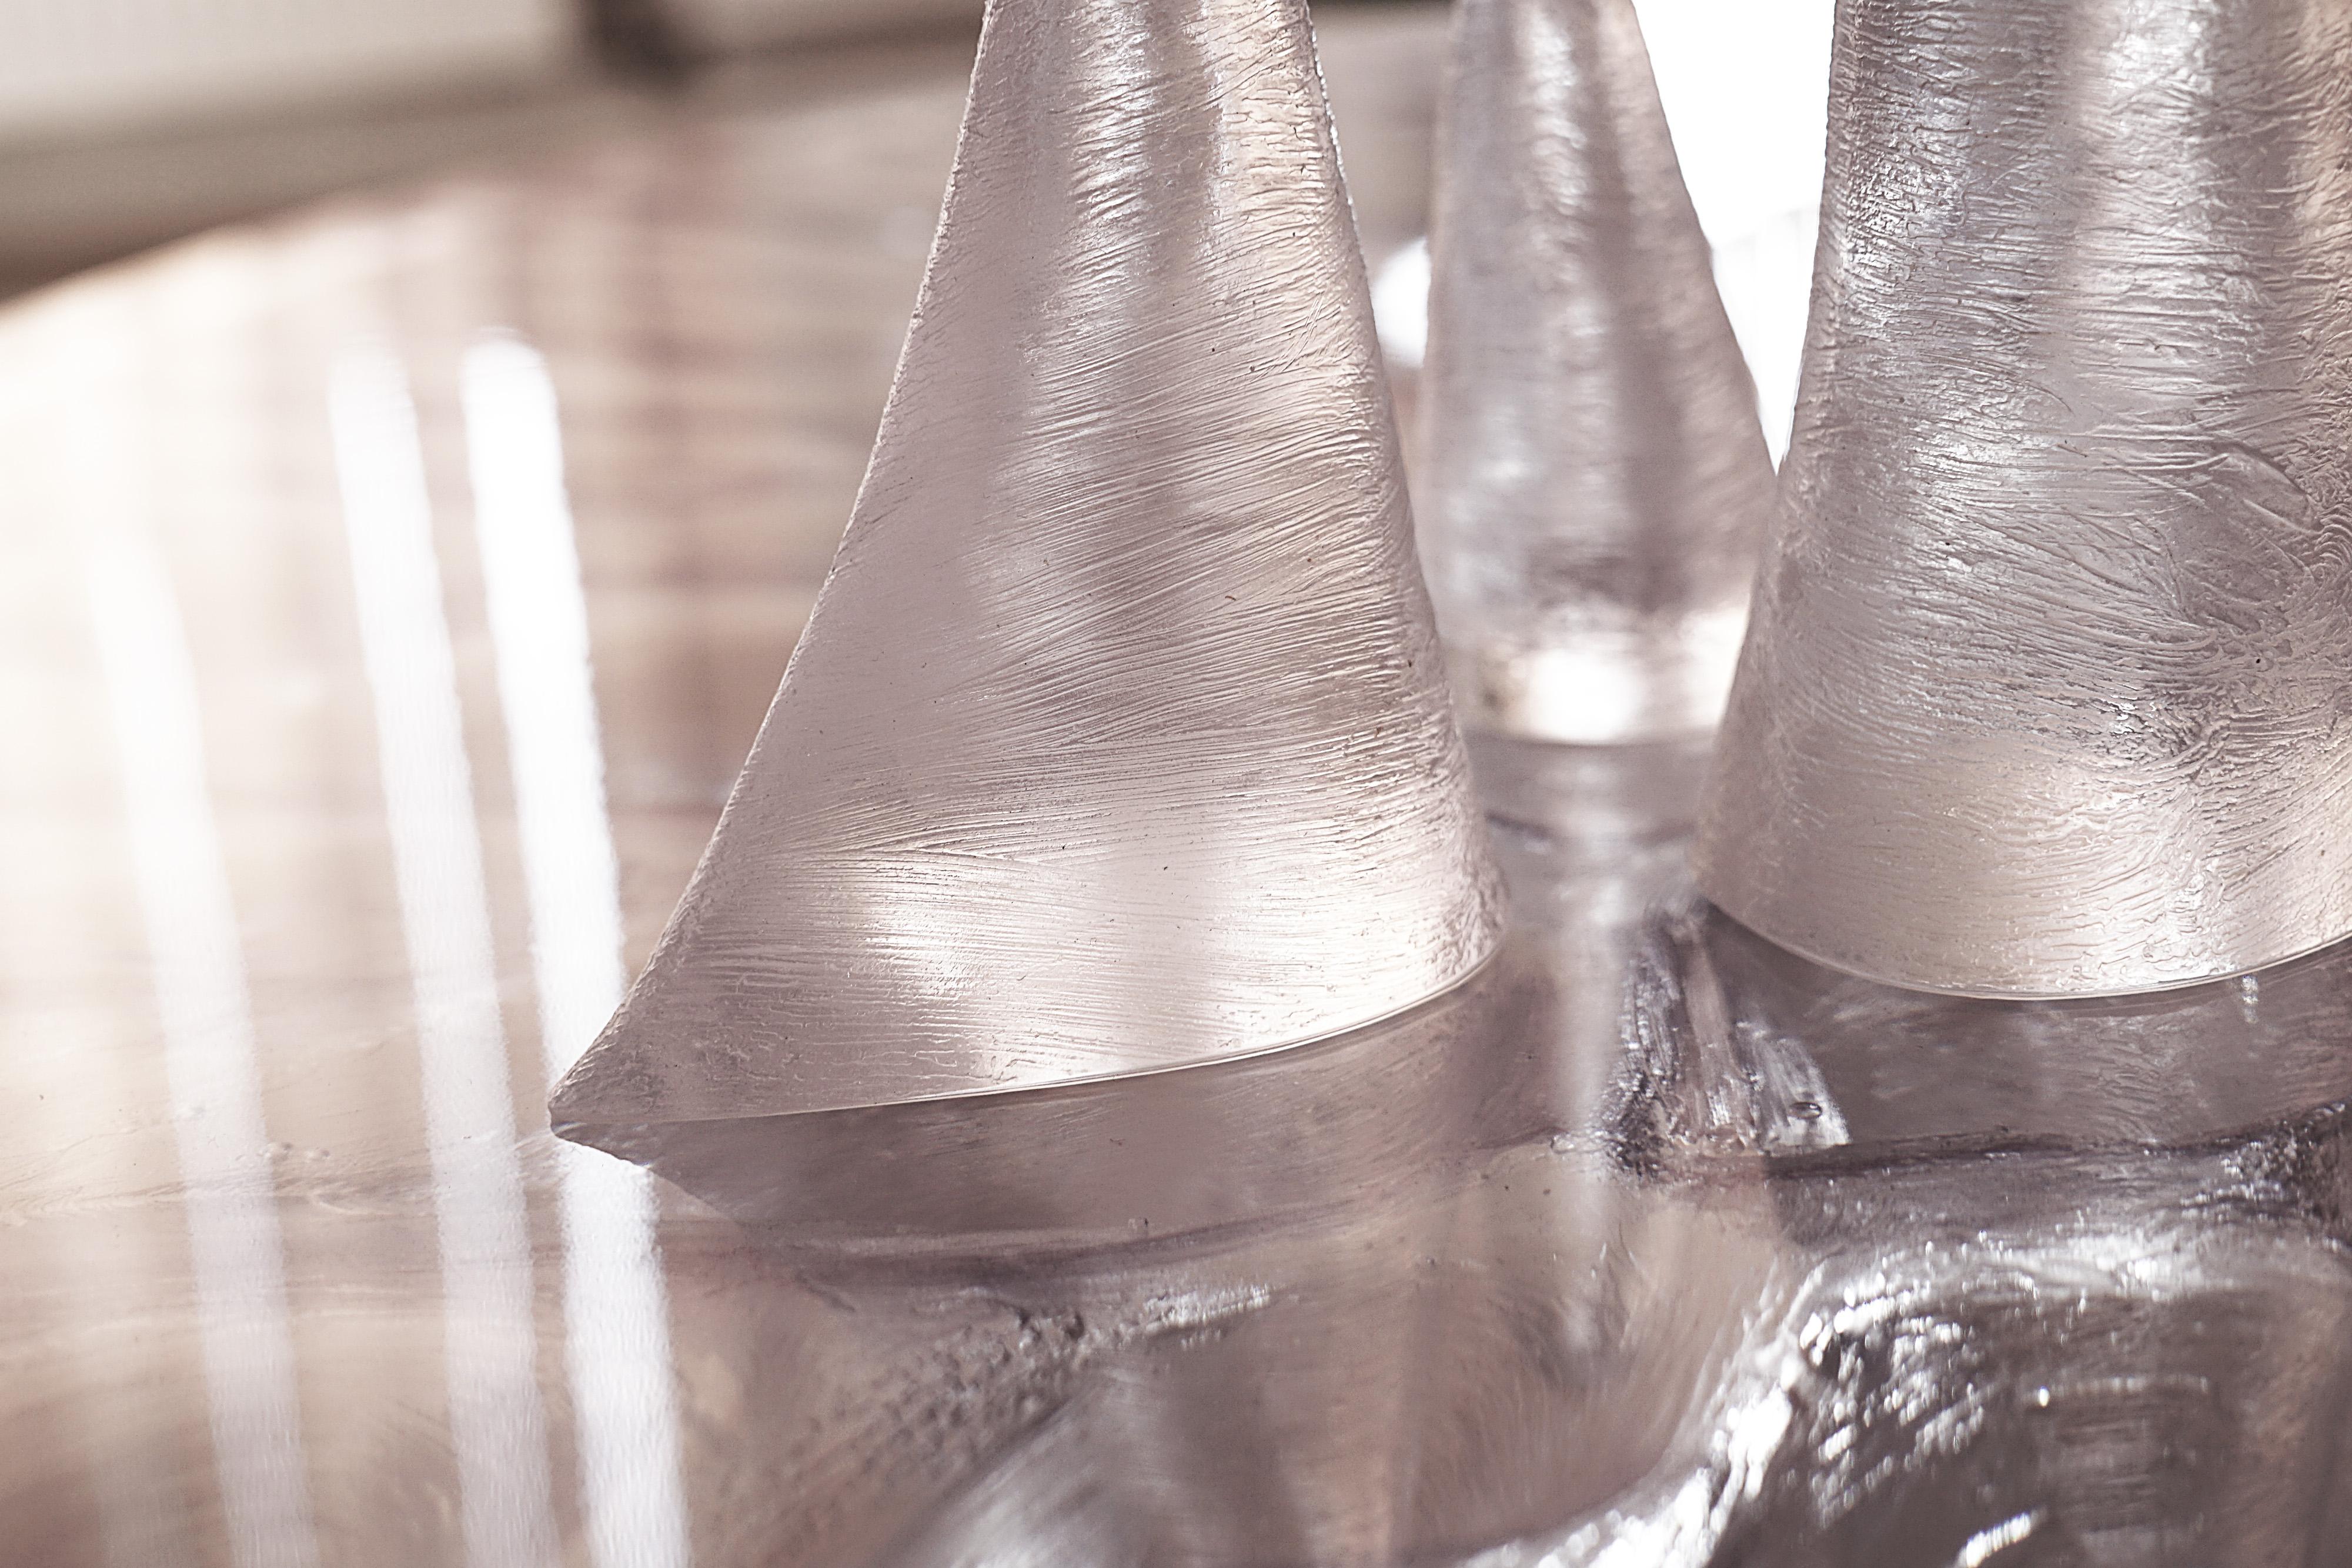 Contemporary Hypnosis Coffee Table by Eduard Locota, illuminated Acrylic Glass / Resin design